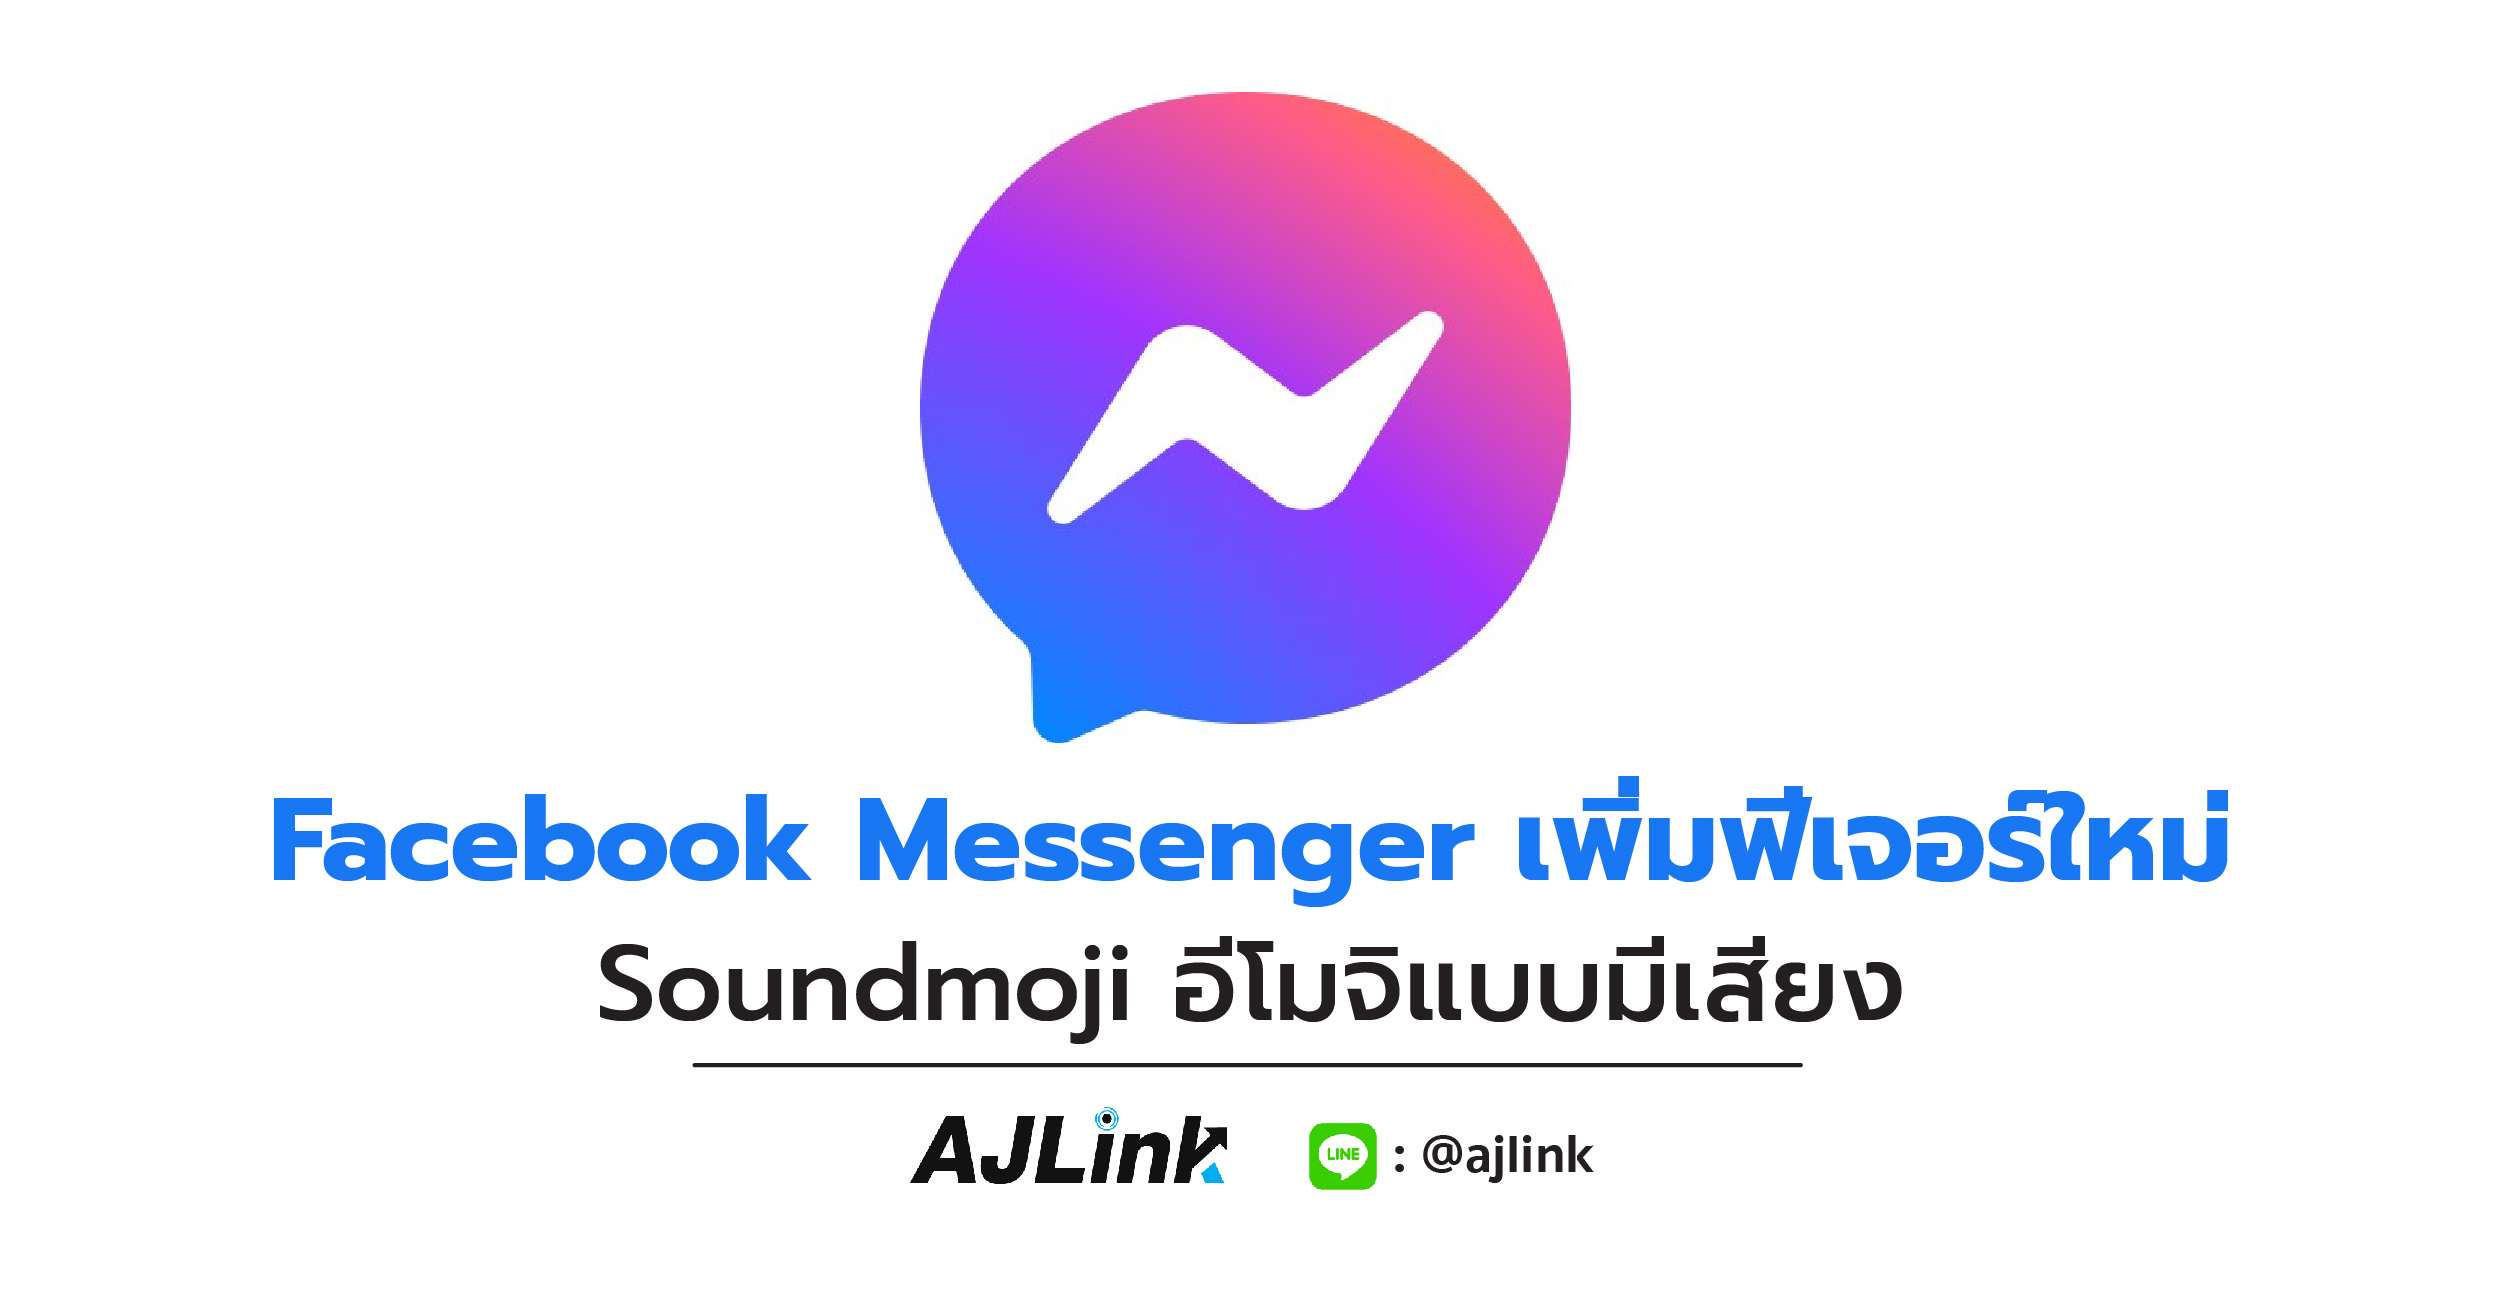 Facebook Messenger เพิ่มฟีเจอร์ใหม่ Soundmoji อีโมจิแบบมีเสียง